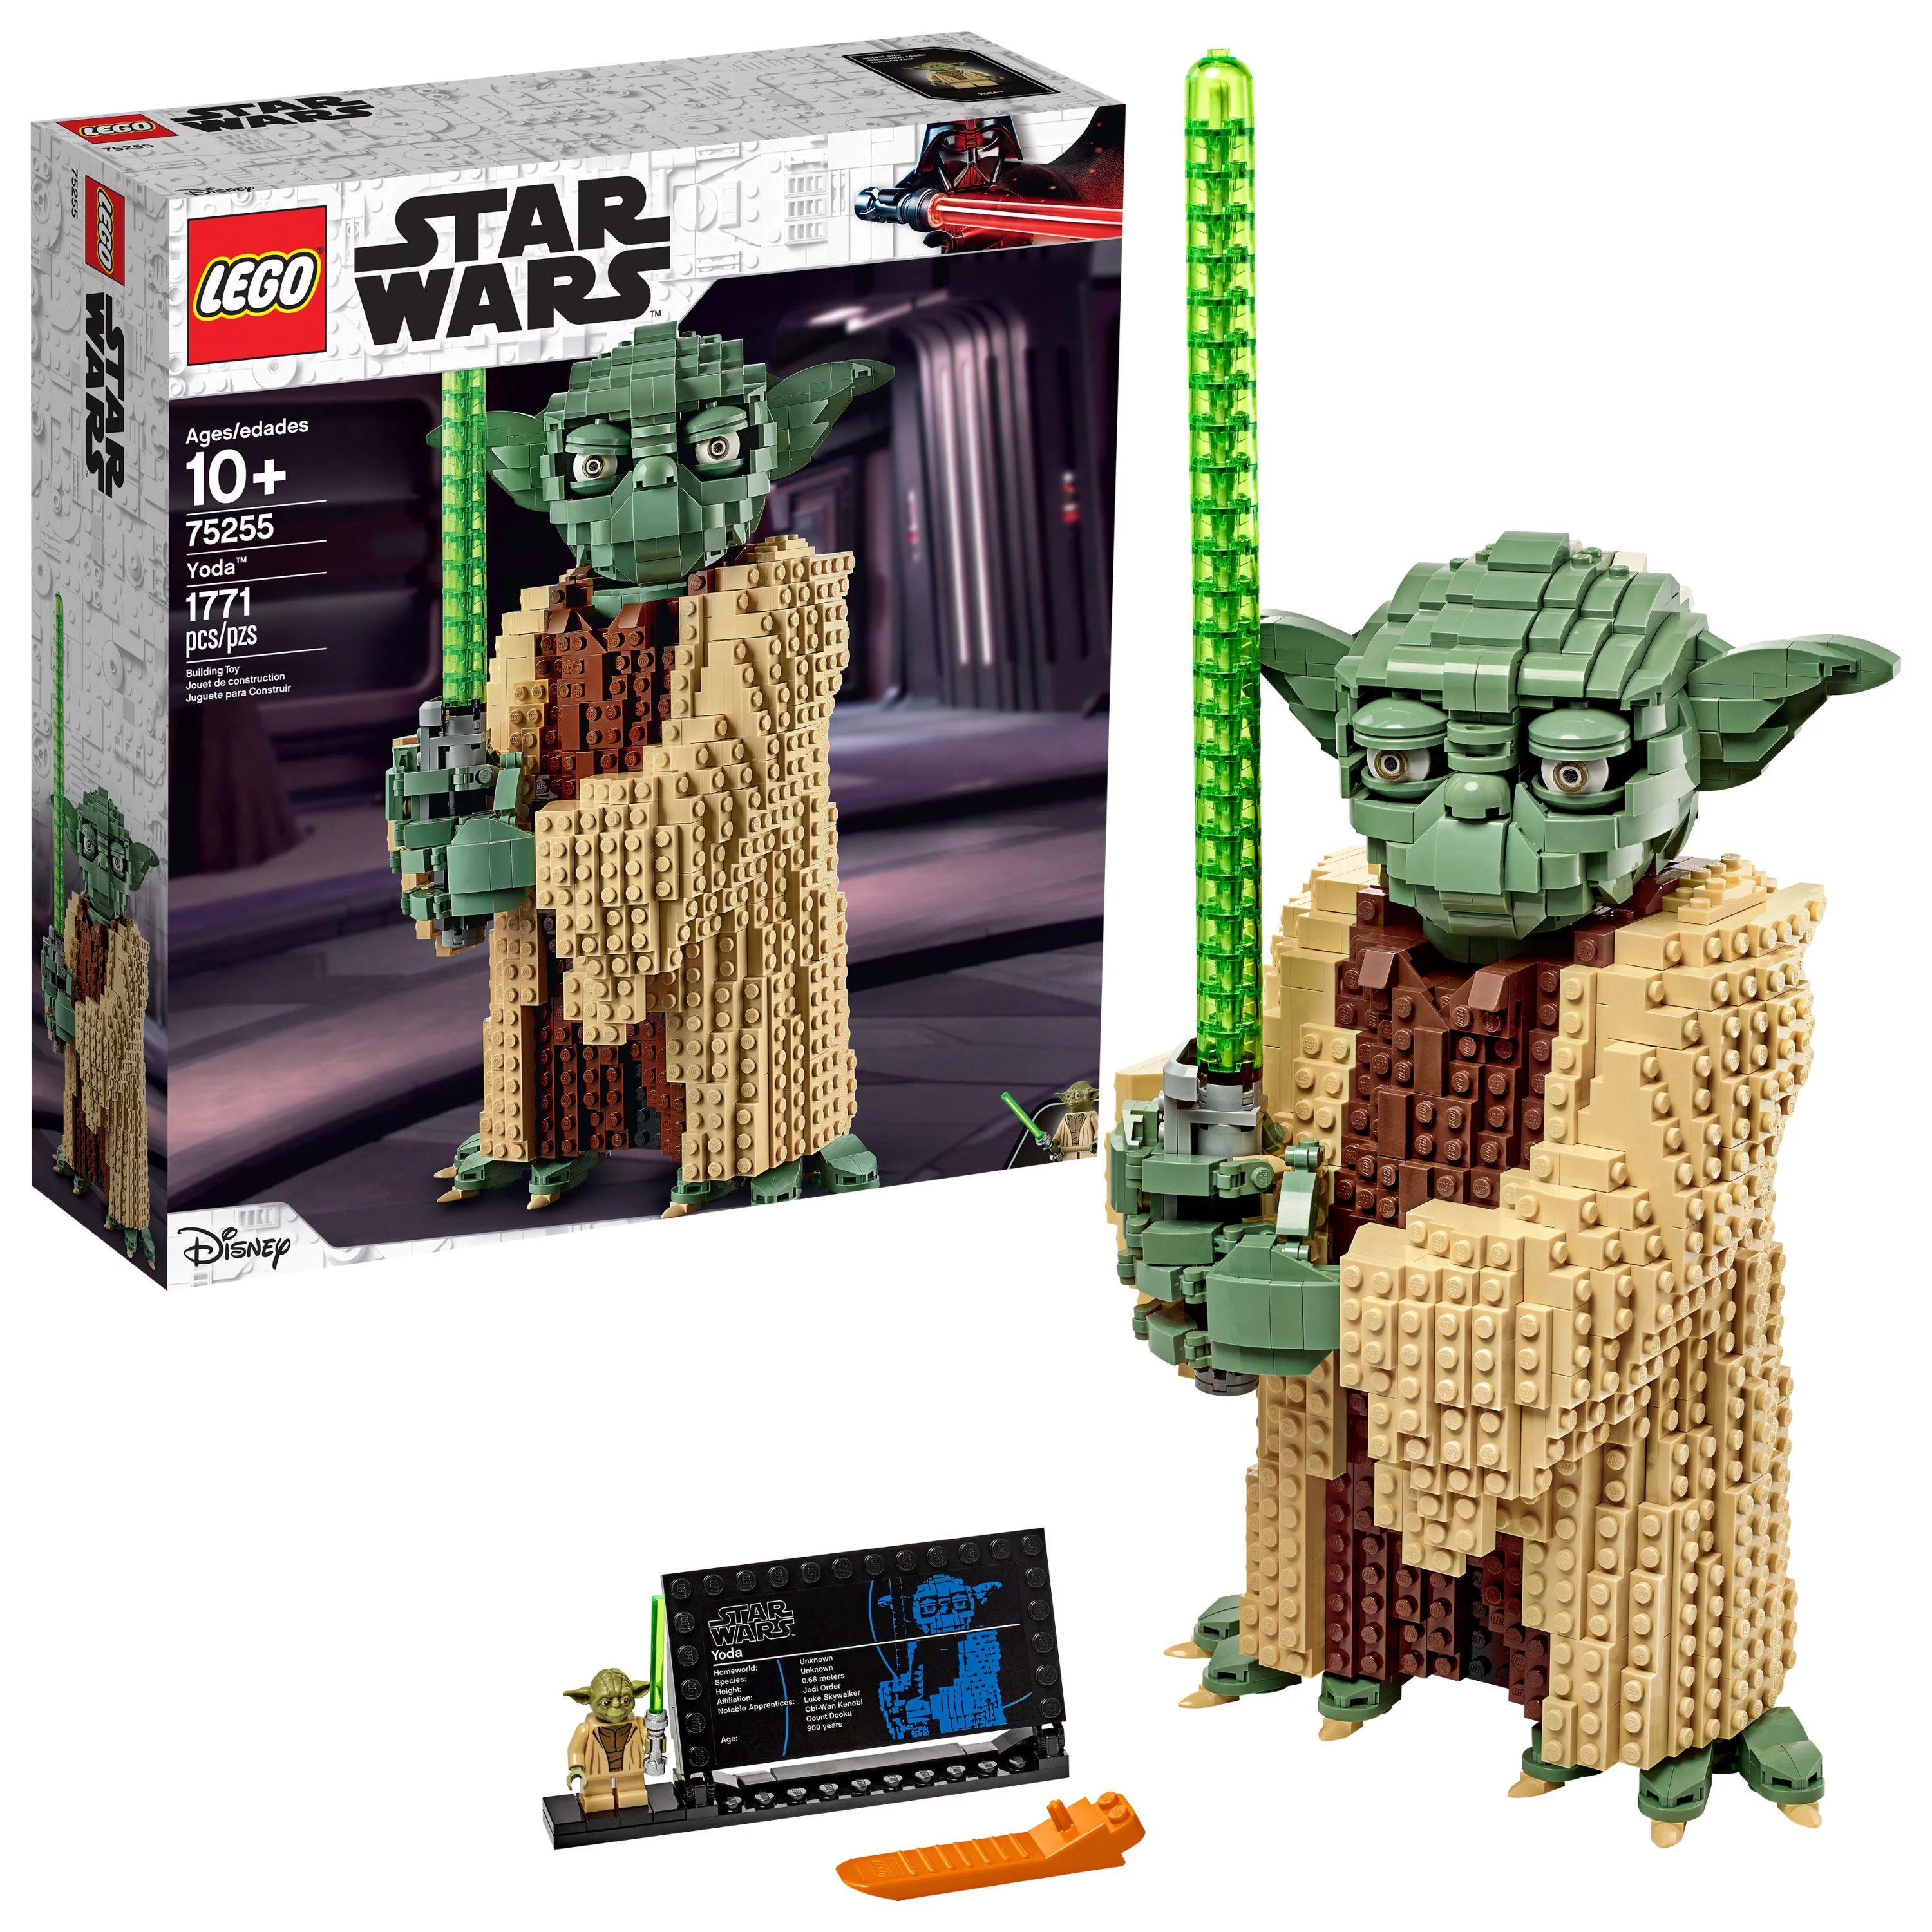 LEGO Star Wars Yoda 75255 Collectible Building Model (1771 Pieces) | Walmart (US)